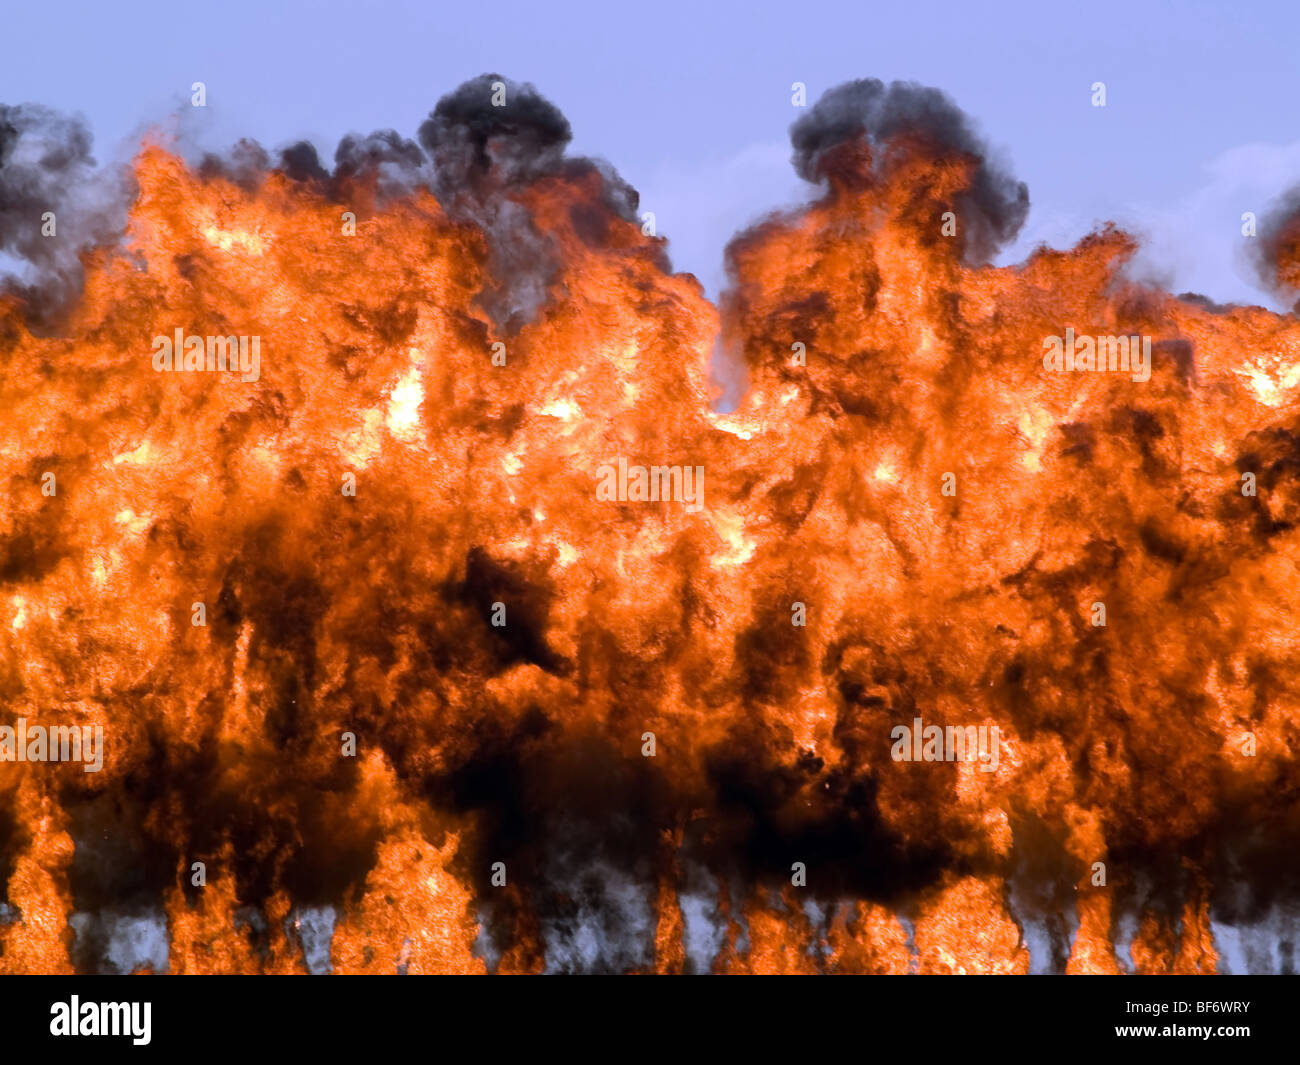 Big Explosion Blast With Black Smoke Cloud Background Free (Fire